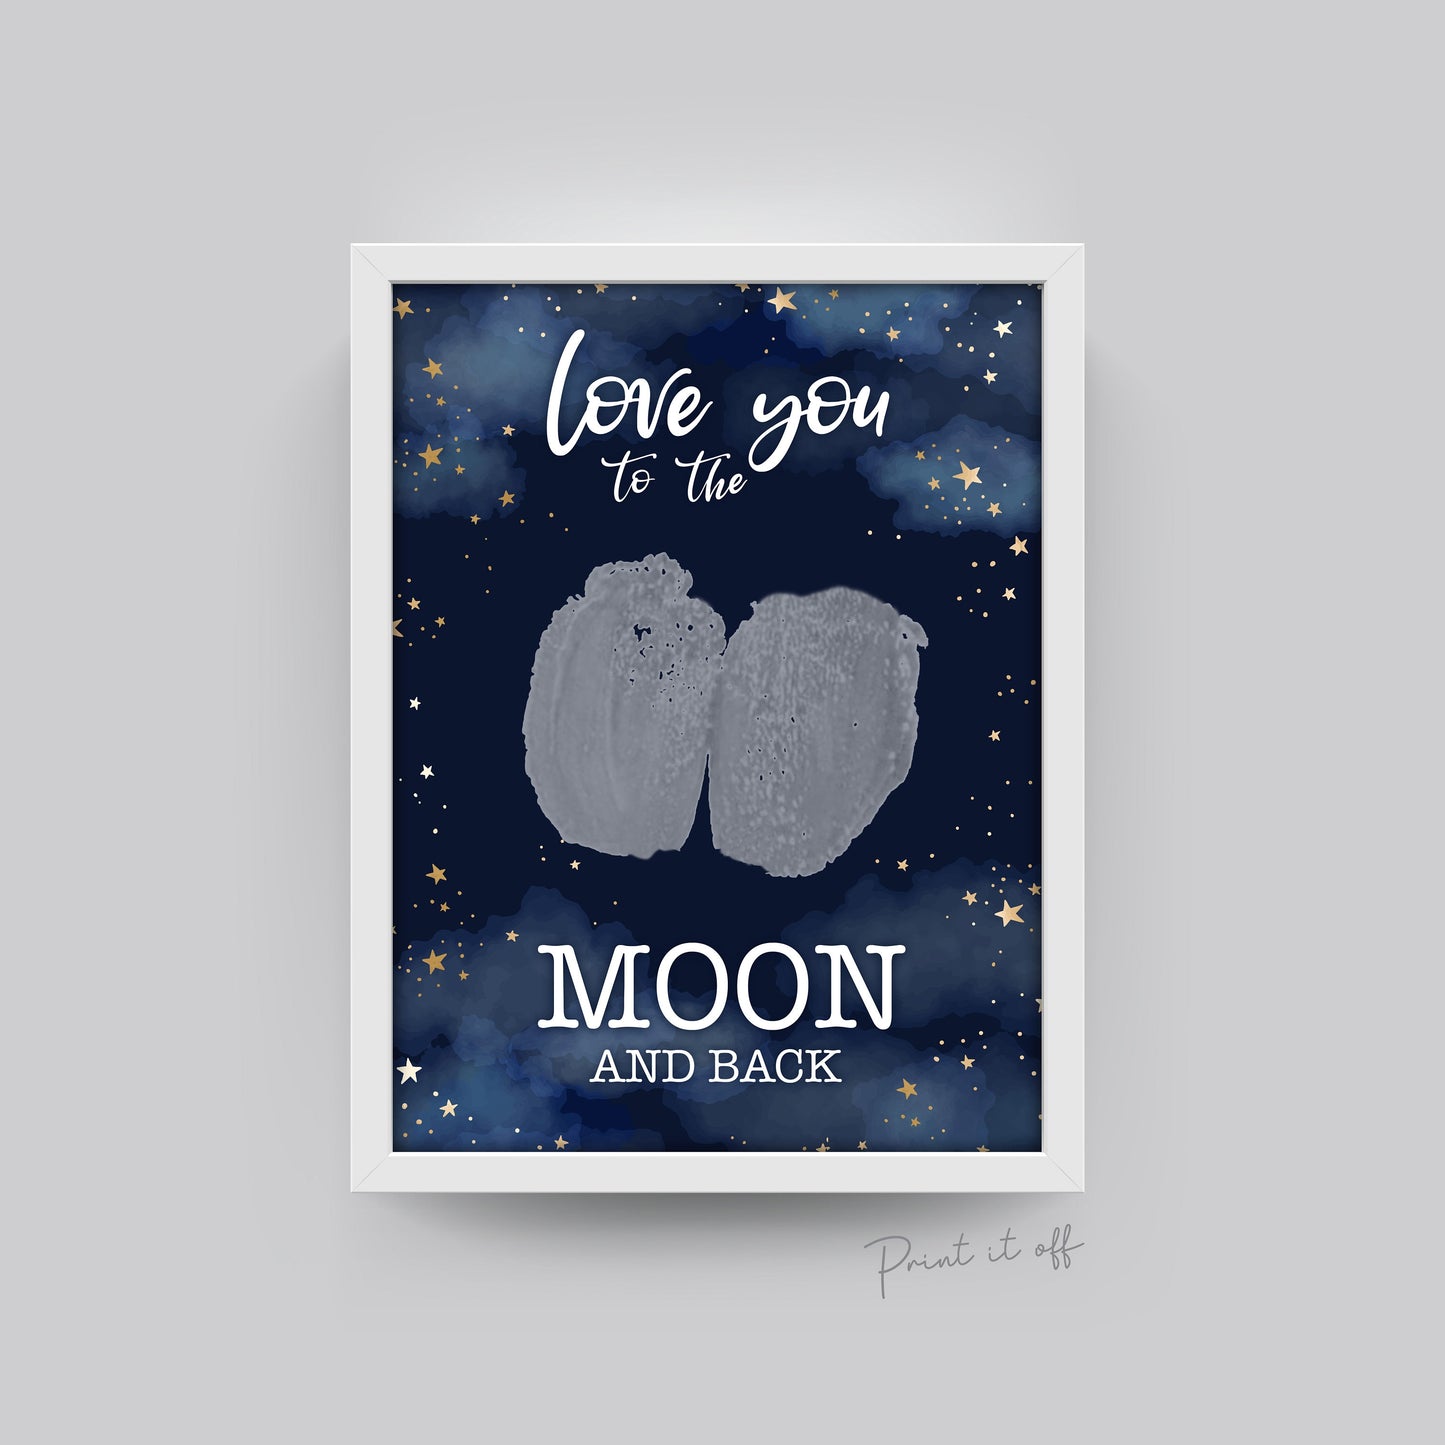 Love You To The Moon and Back / Bottom Bum Print / Valentine's Day / DIY Handprint Art Craft Card / Kids Newborn Baby / Print It Off 0261